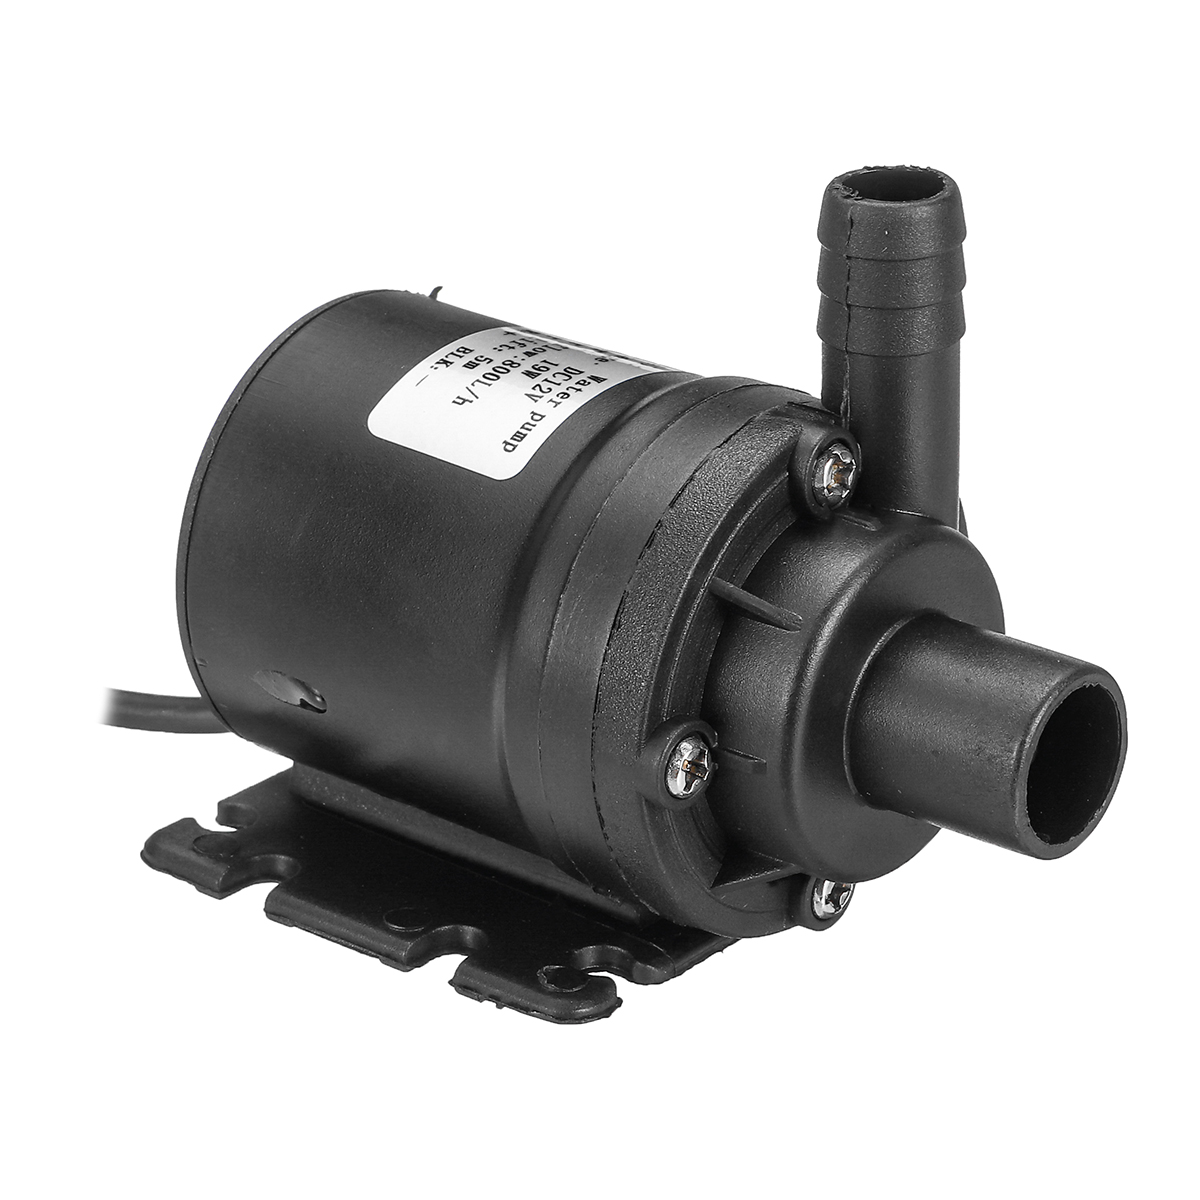 Low Noise Mini Submersible Water Pump DC12V Brushless Motor Lift 5M IP68 